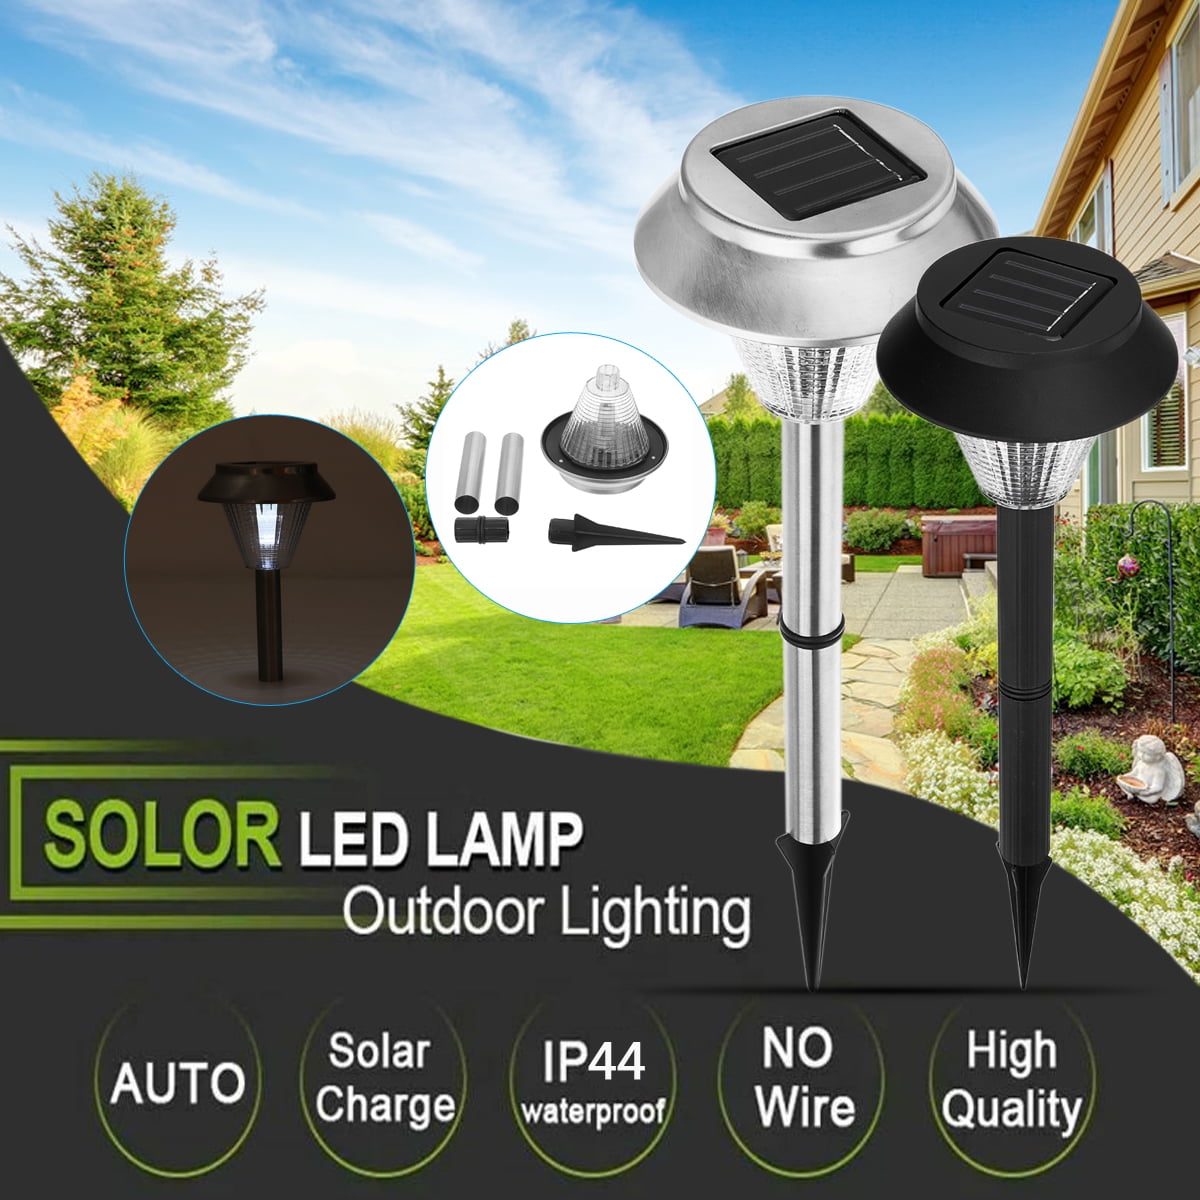 Details about   LED Outdoor Solar Powered Lantern Garden Lawn Landscape Lights Lawn Patio Yard 